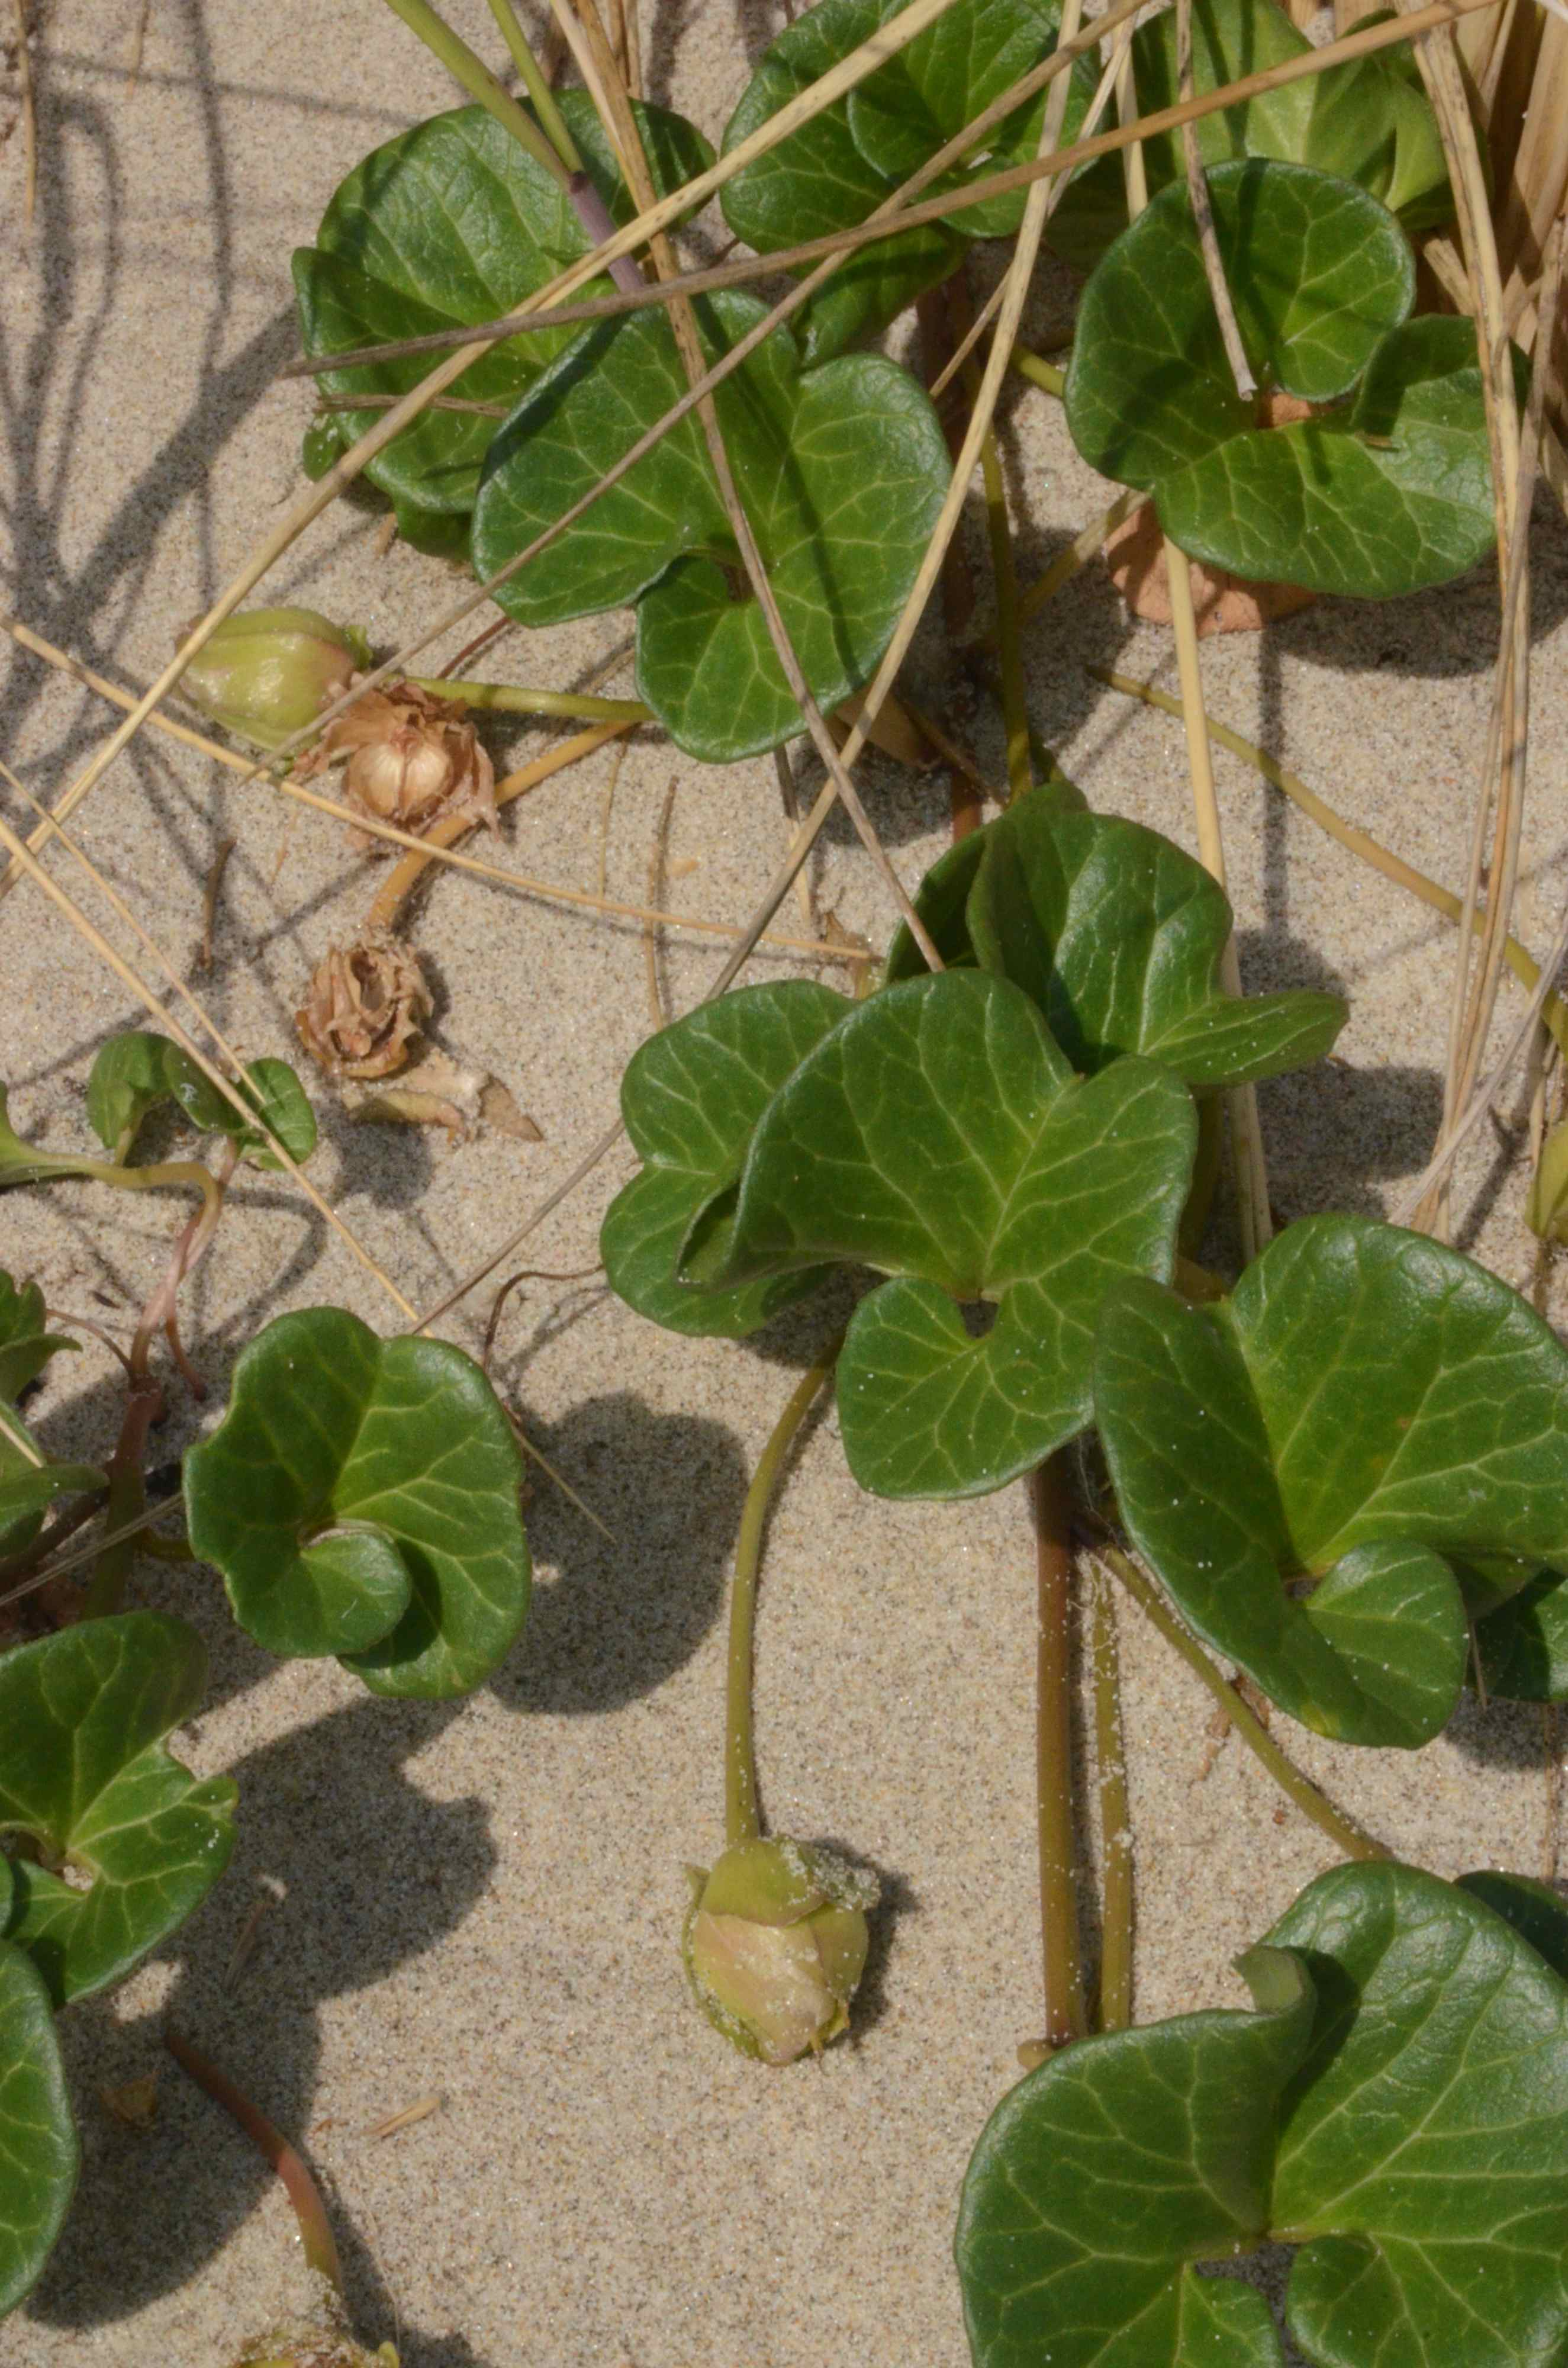 Calystegia soldanella with immature fruit growing in coastal dunes near Pacific City, Oregon.